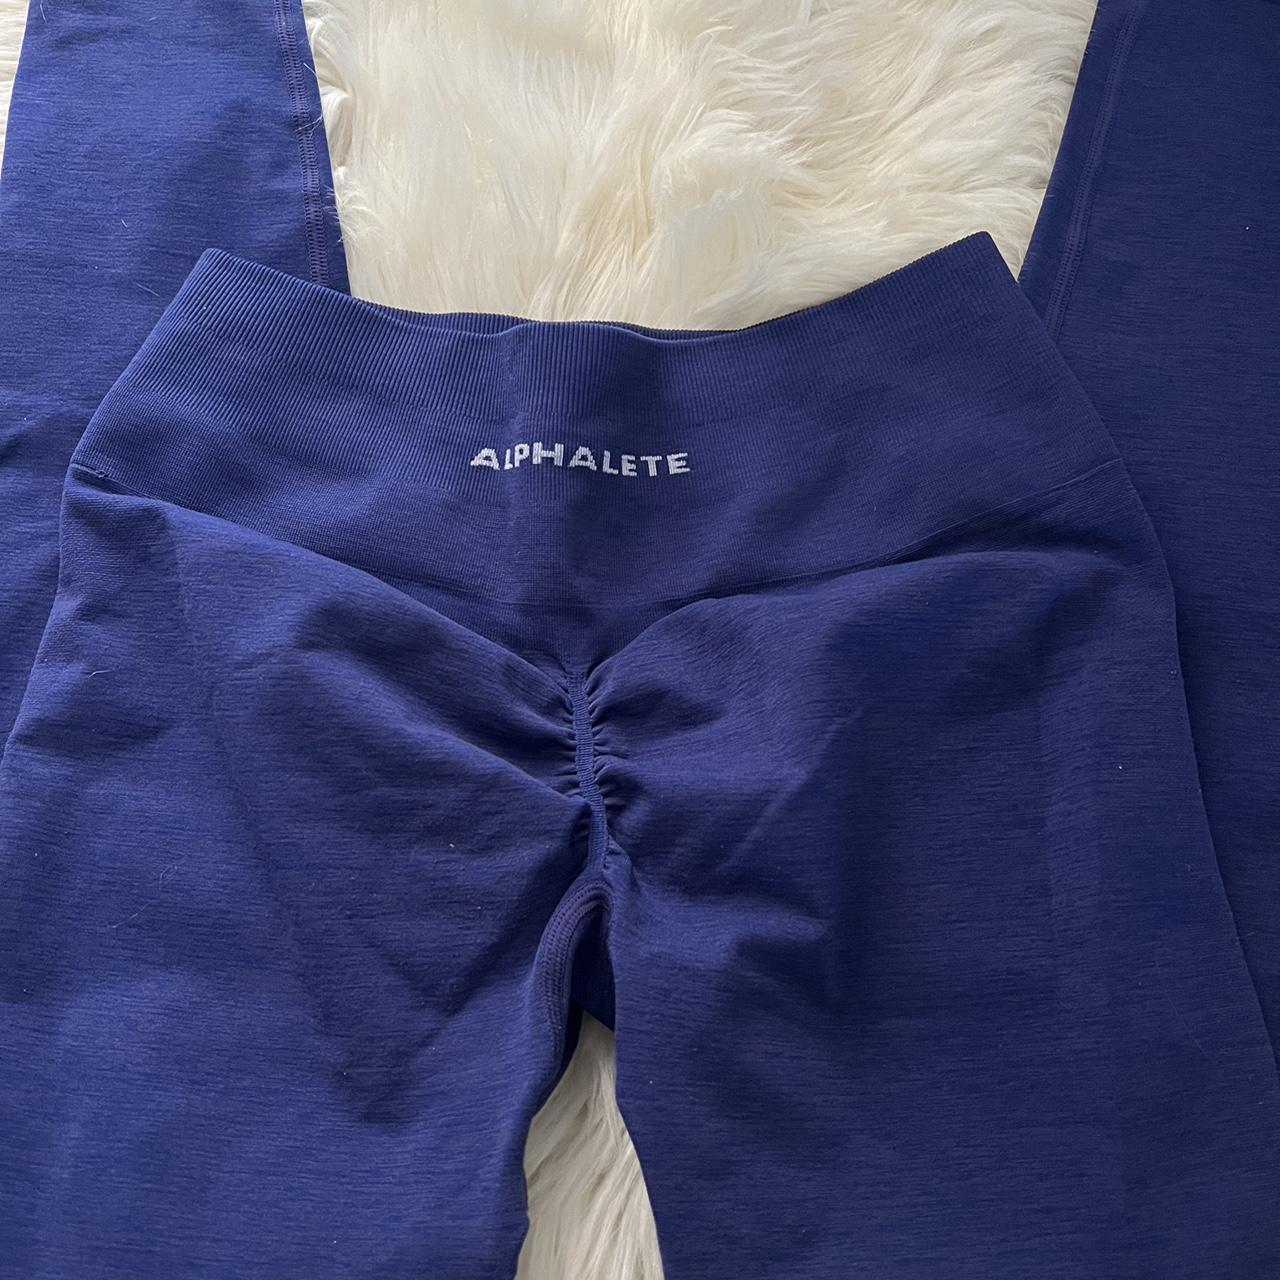 Alphalete Pulse Surge leggings #alphalete - Depop